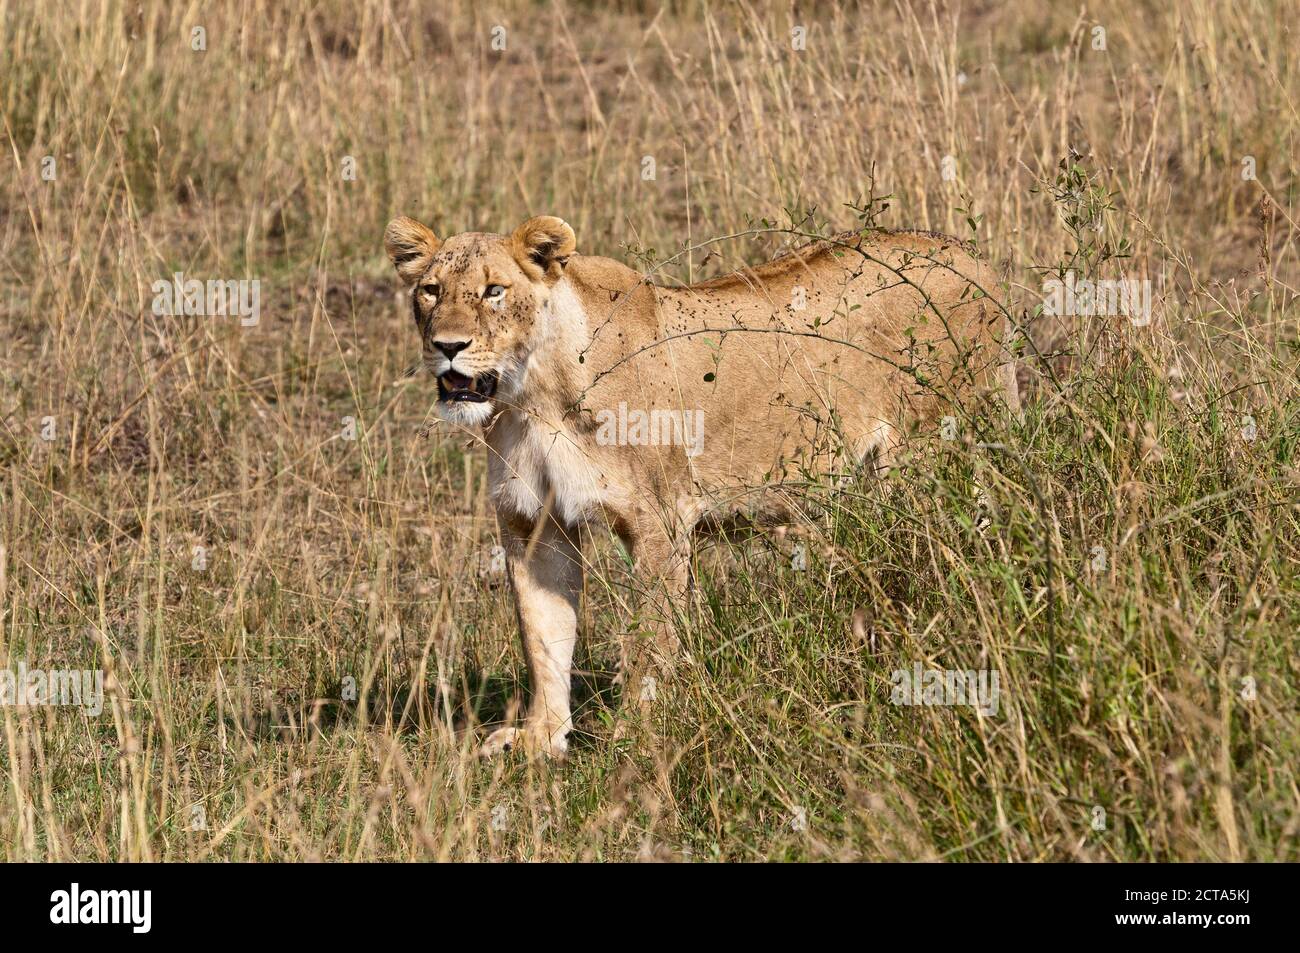 Afrika, Kenia, Maasai Mara National Reserve, Lion Panthera leo, weiblich, im hohen Gras stehend Stockfoto